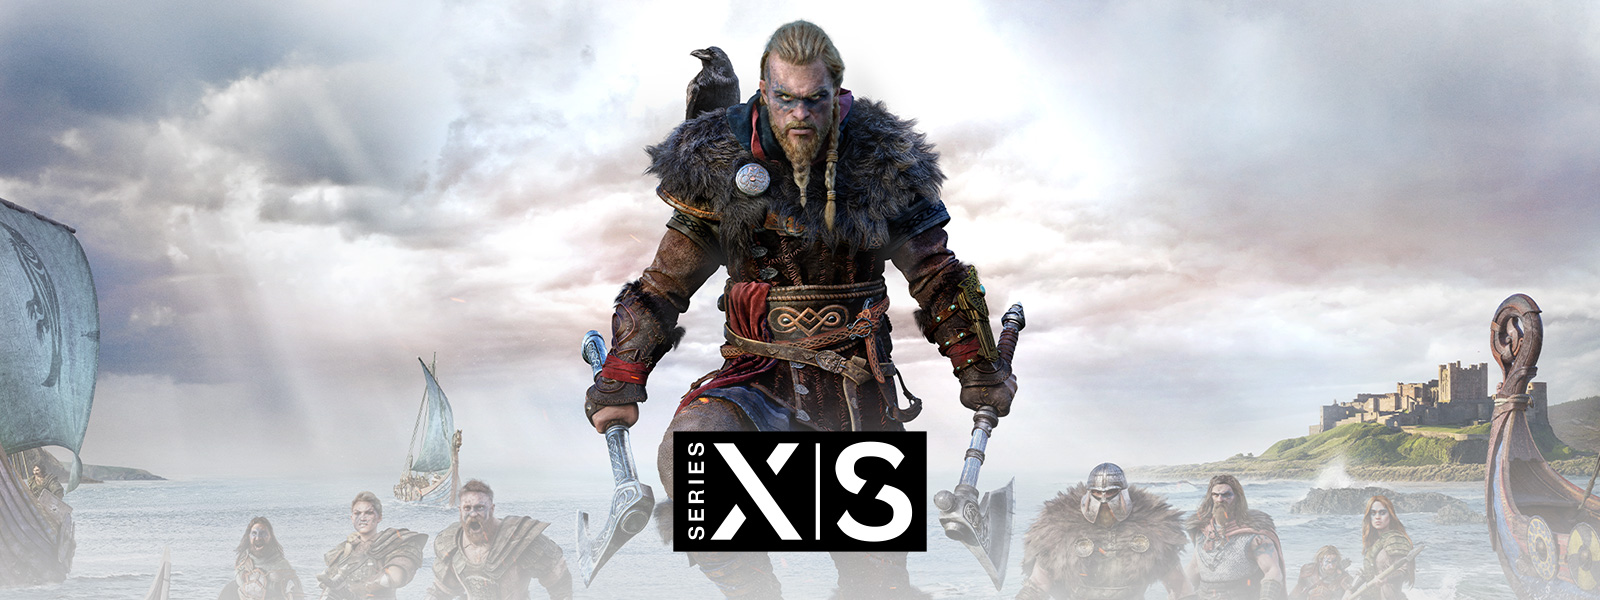 Assassin’s Creed Valhalla, Xbox Series X|S, легендарный викинг Эйвор ведет свою армию в бой.